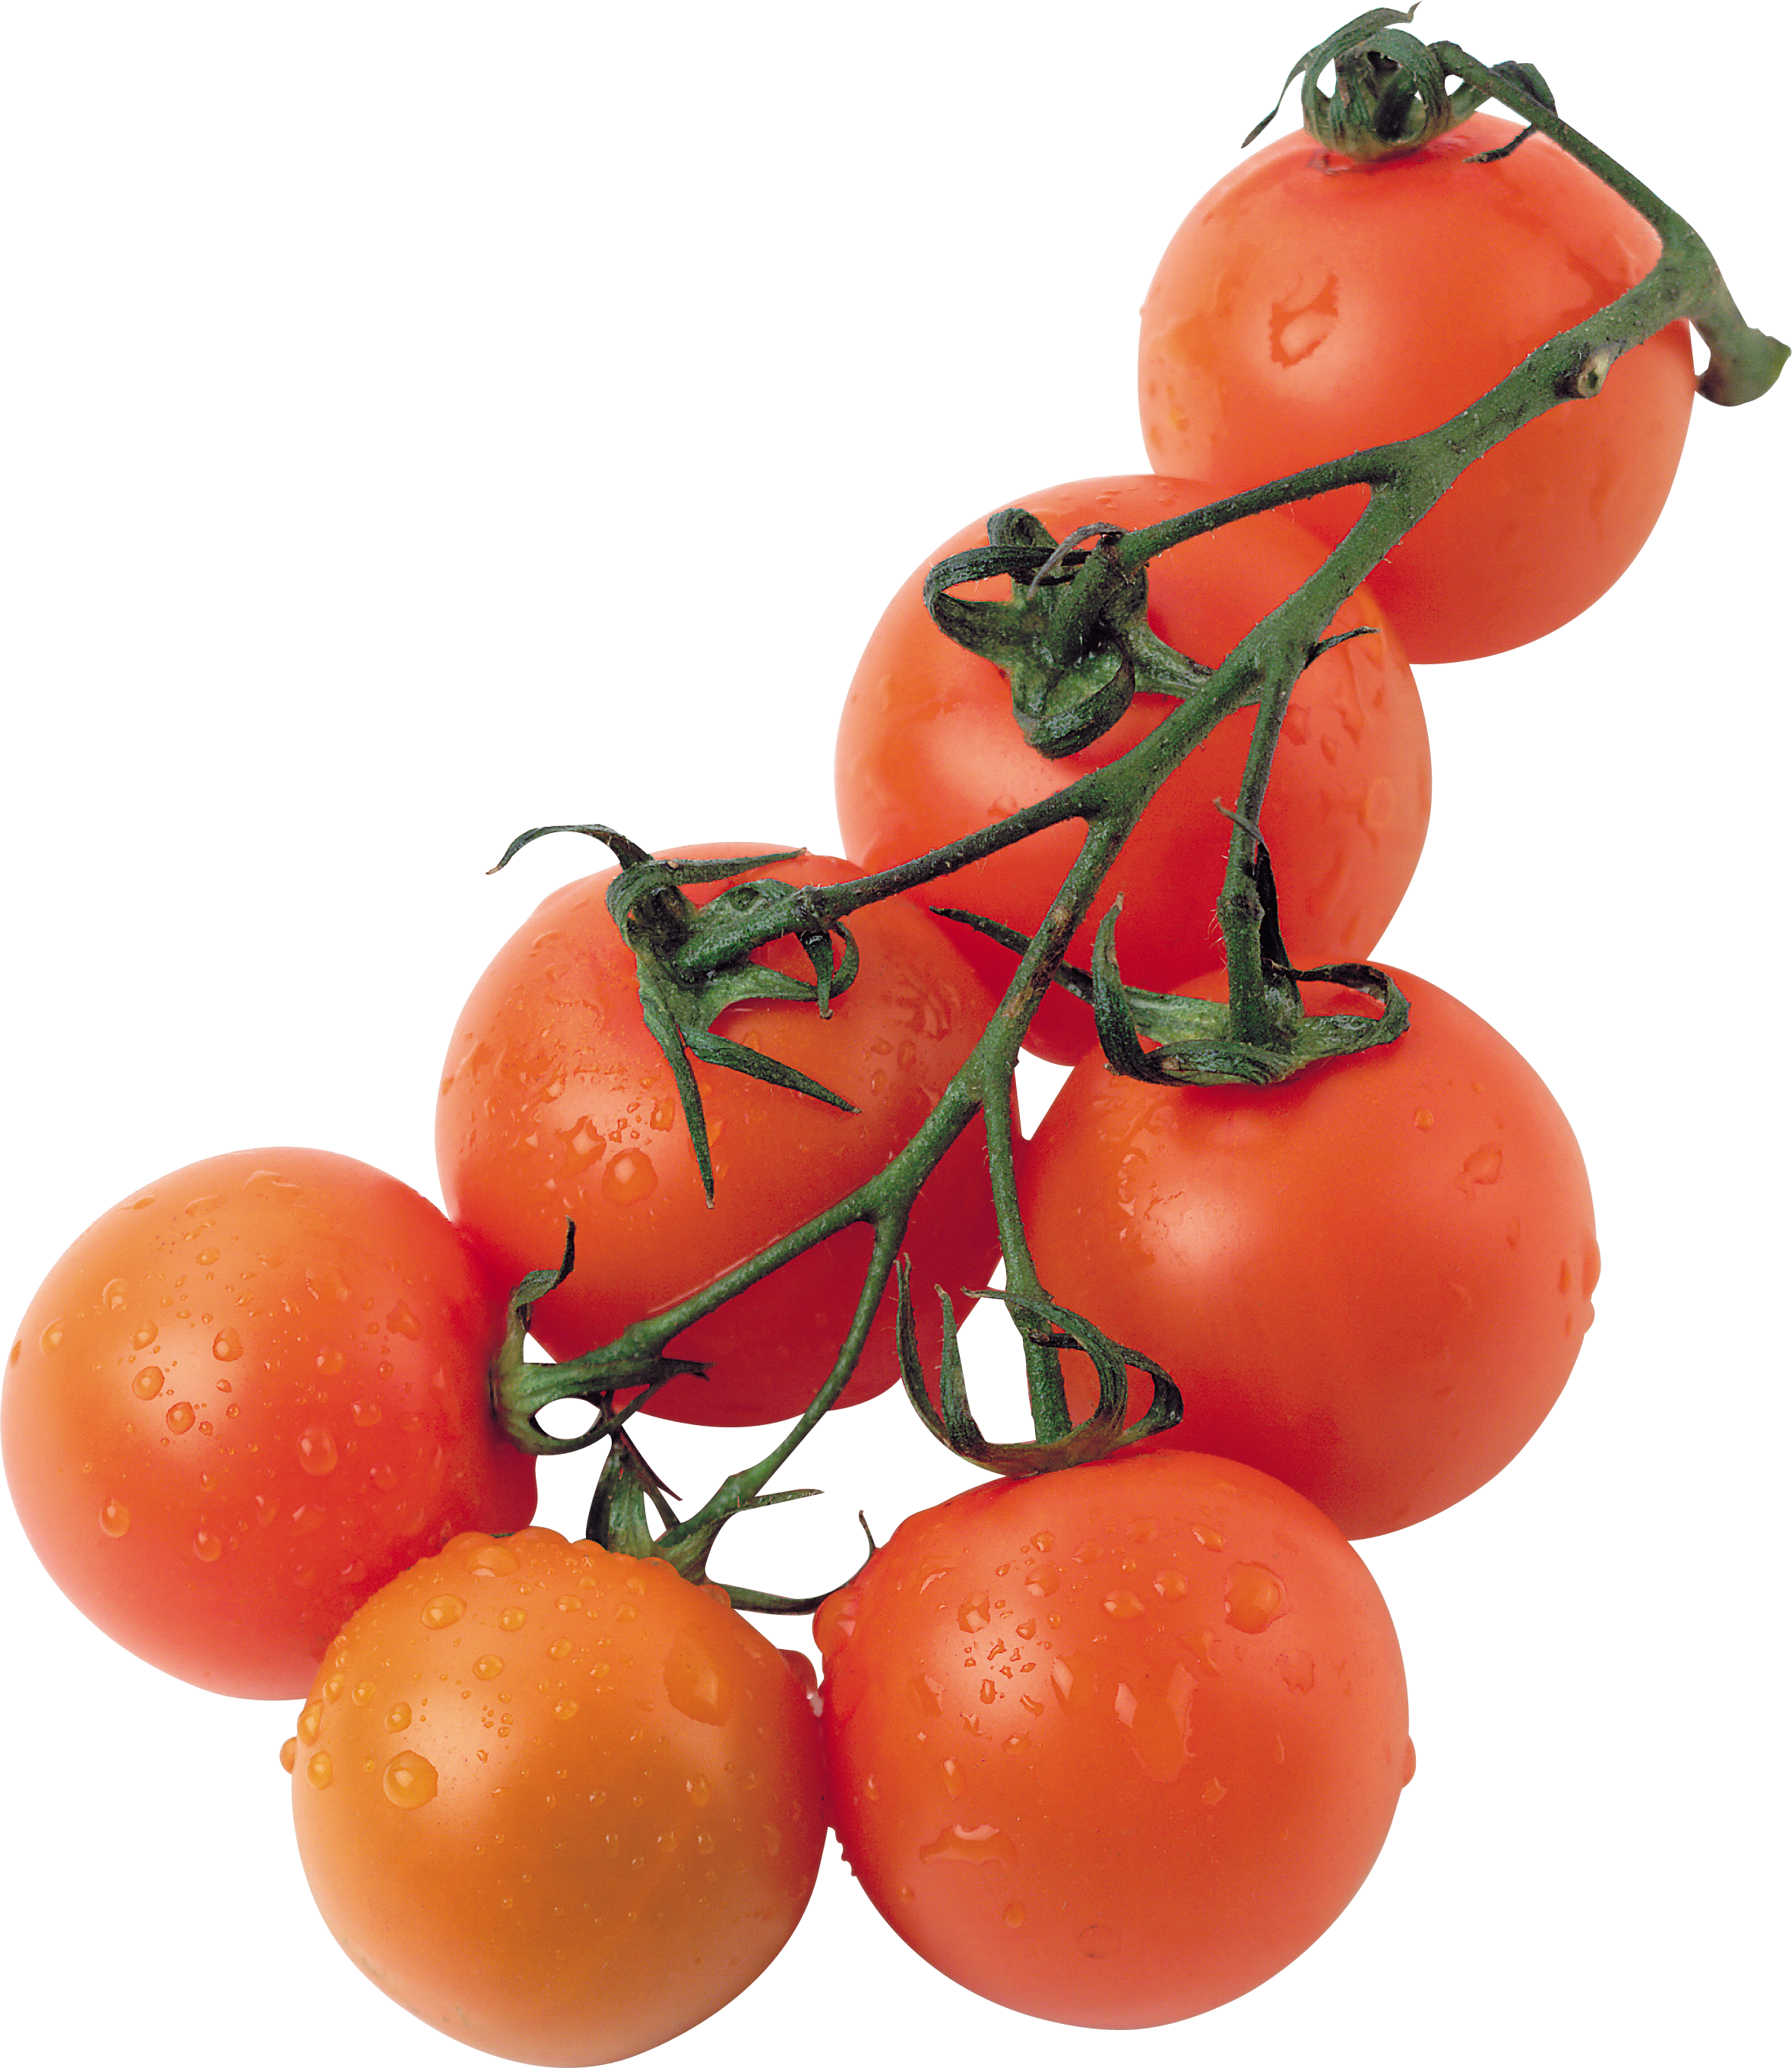 Tomate cereja (tomates pequenos)